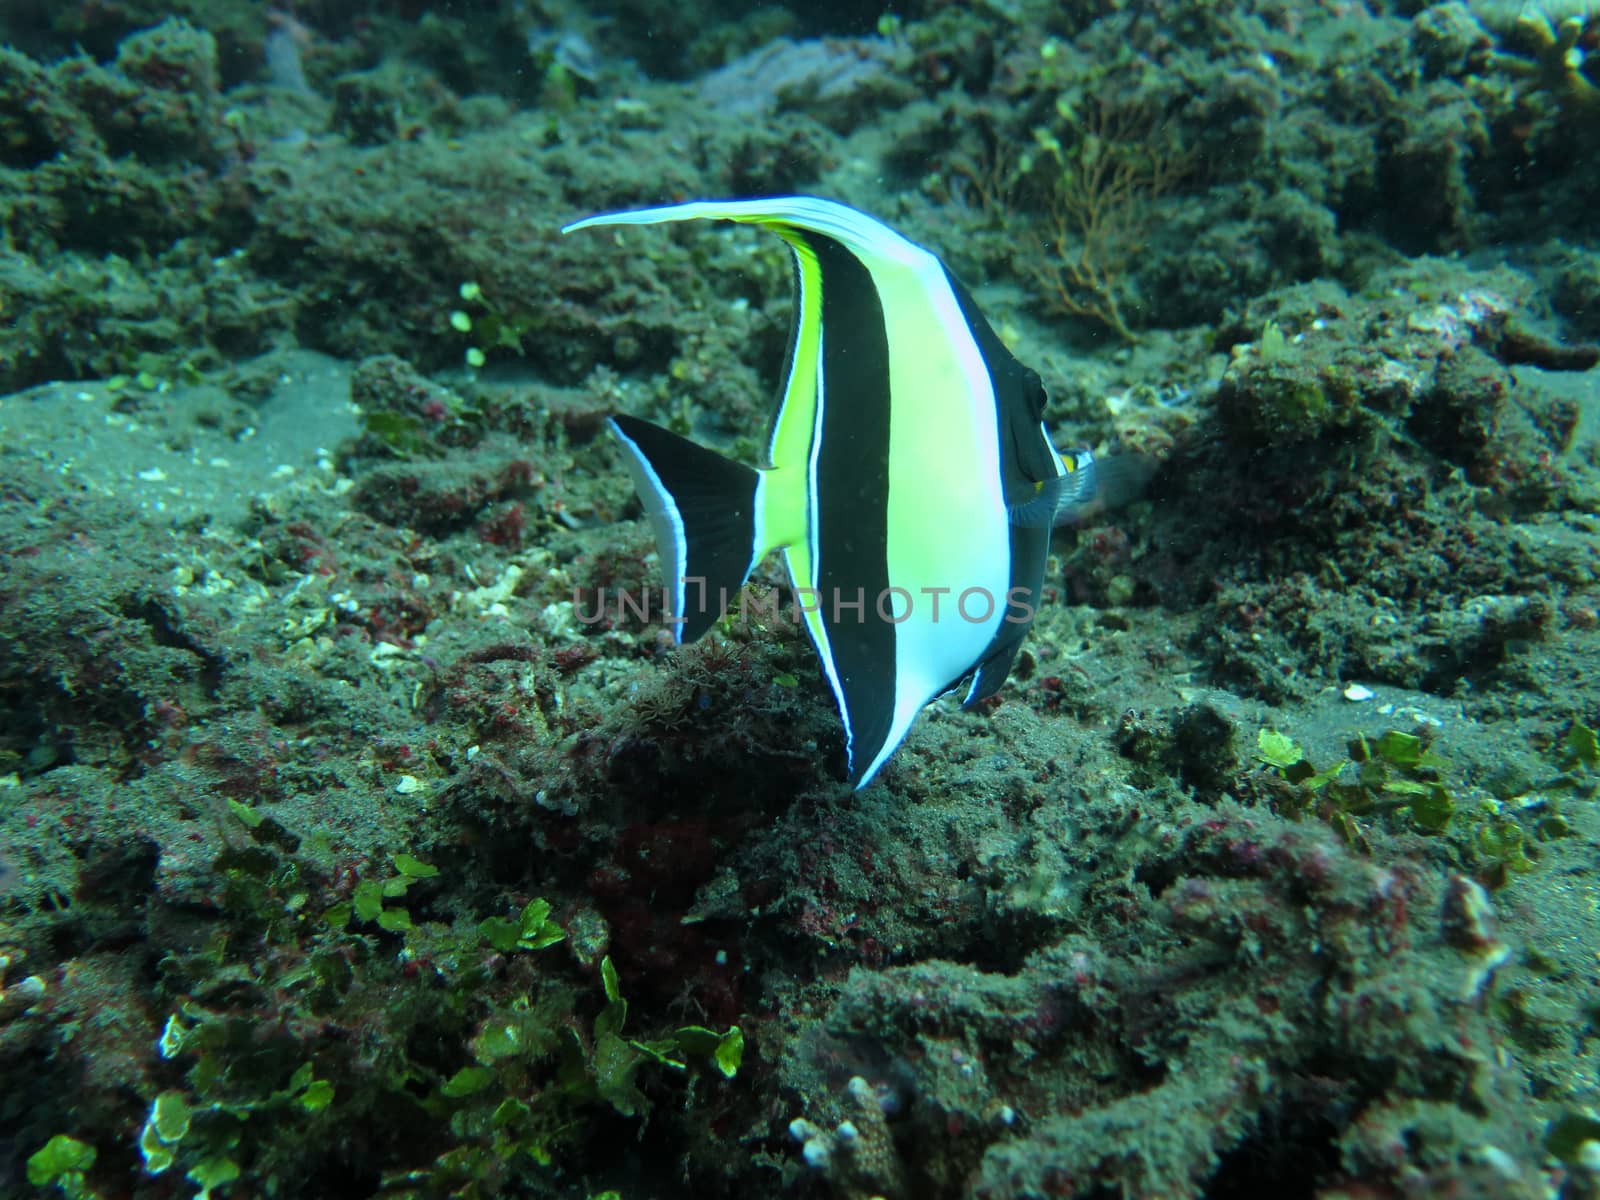 Thriving coral reef alive with marine life and tropical fish (Moorish Idols), Bali.